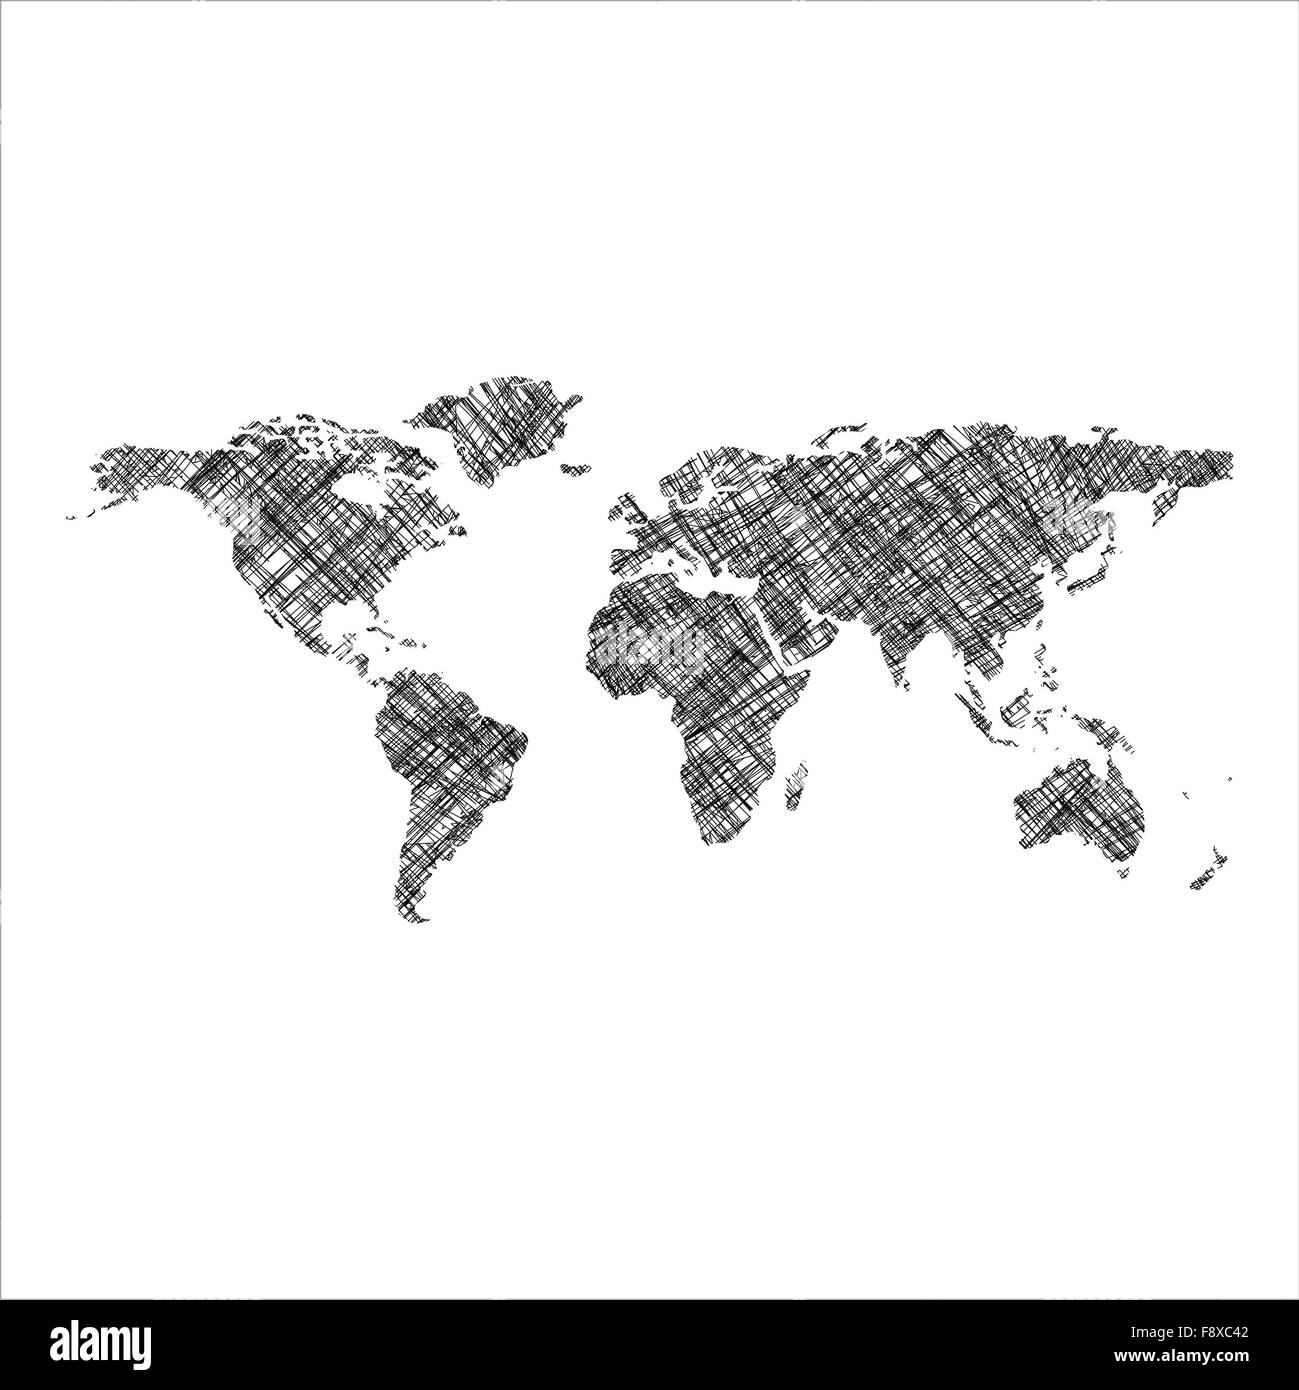 Mapa Del Mundo Dividido En Regiones Mapa Negro Fino D 3908